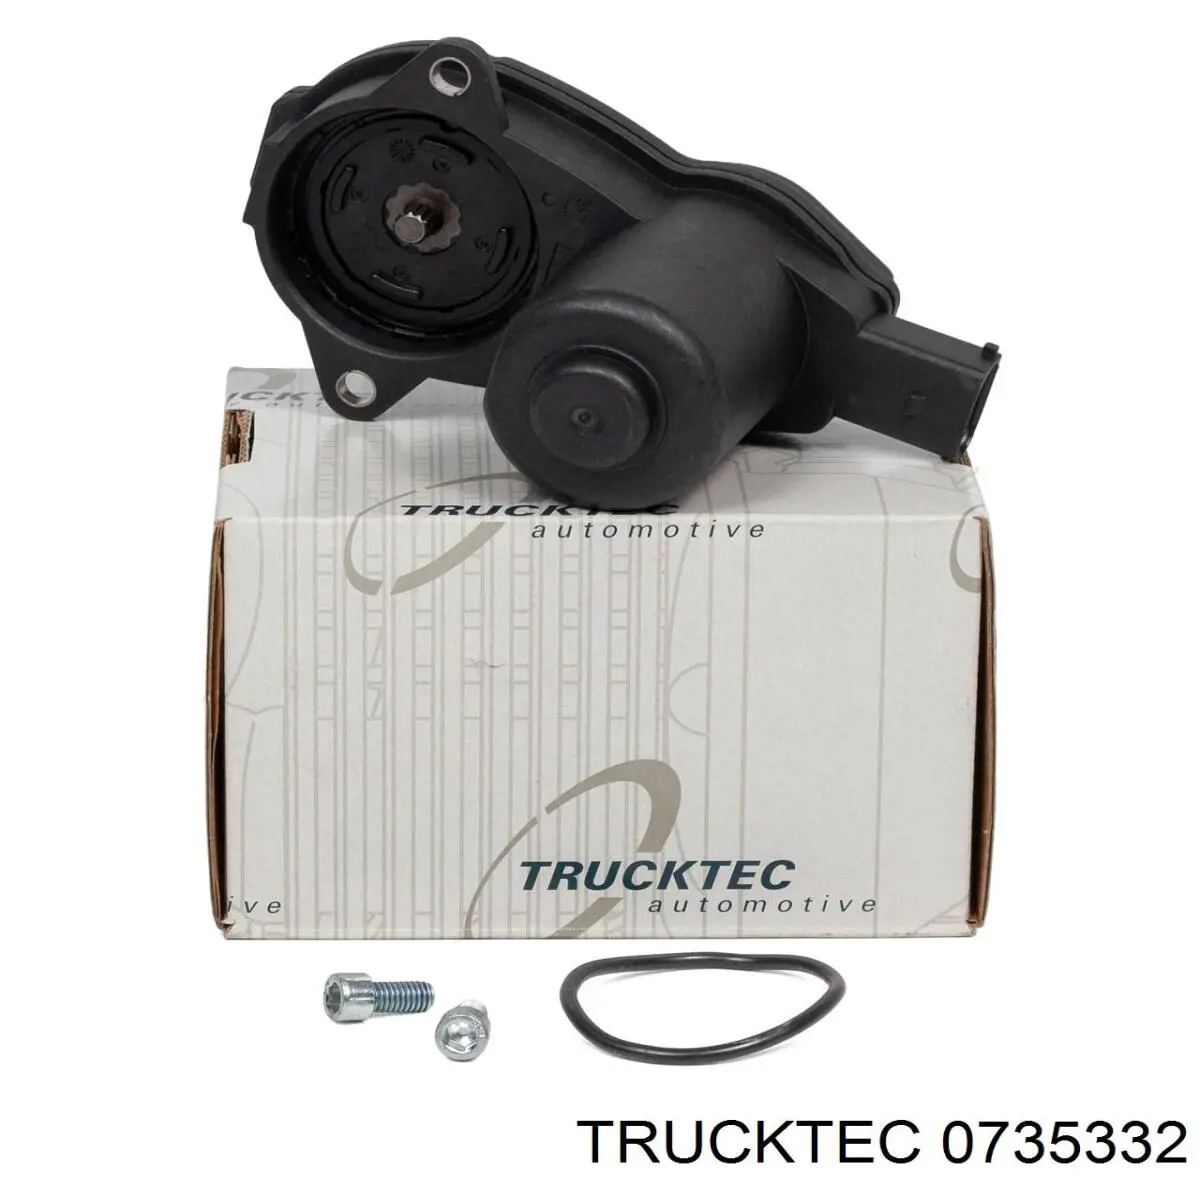 Мотор привода тормозного суппорта заднего Trucktec 0735332